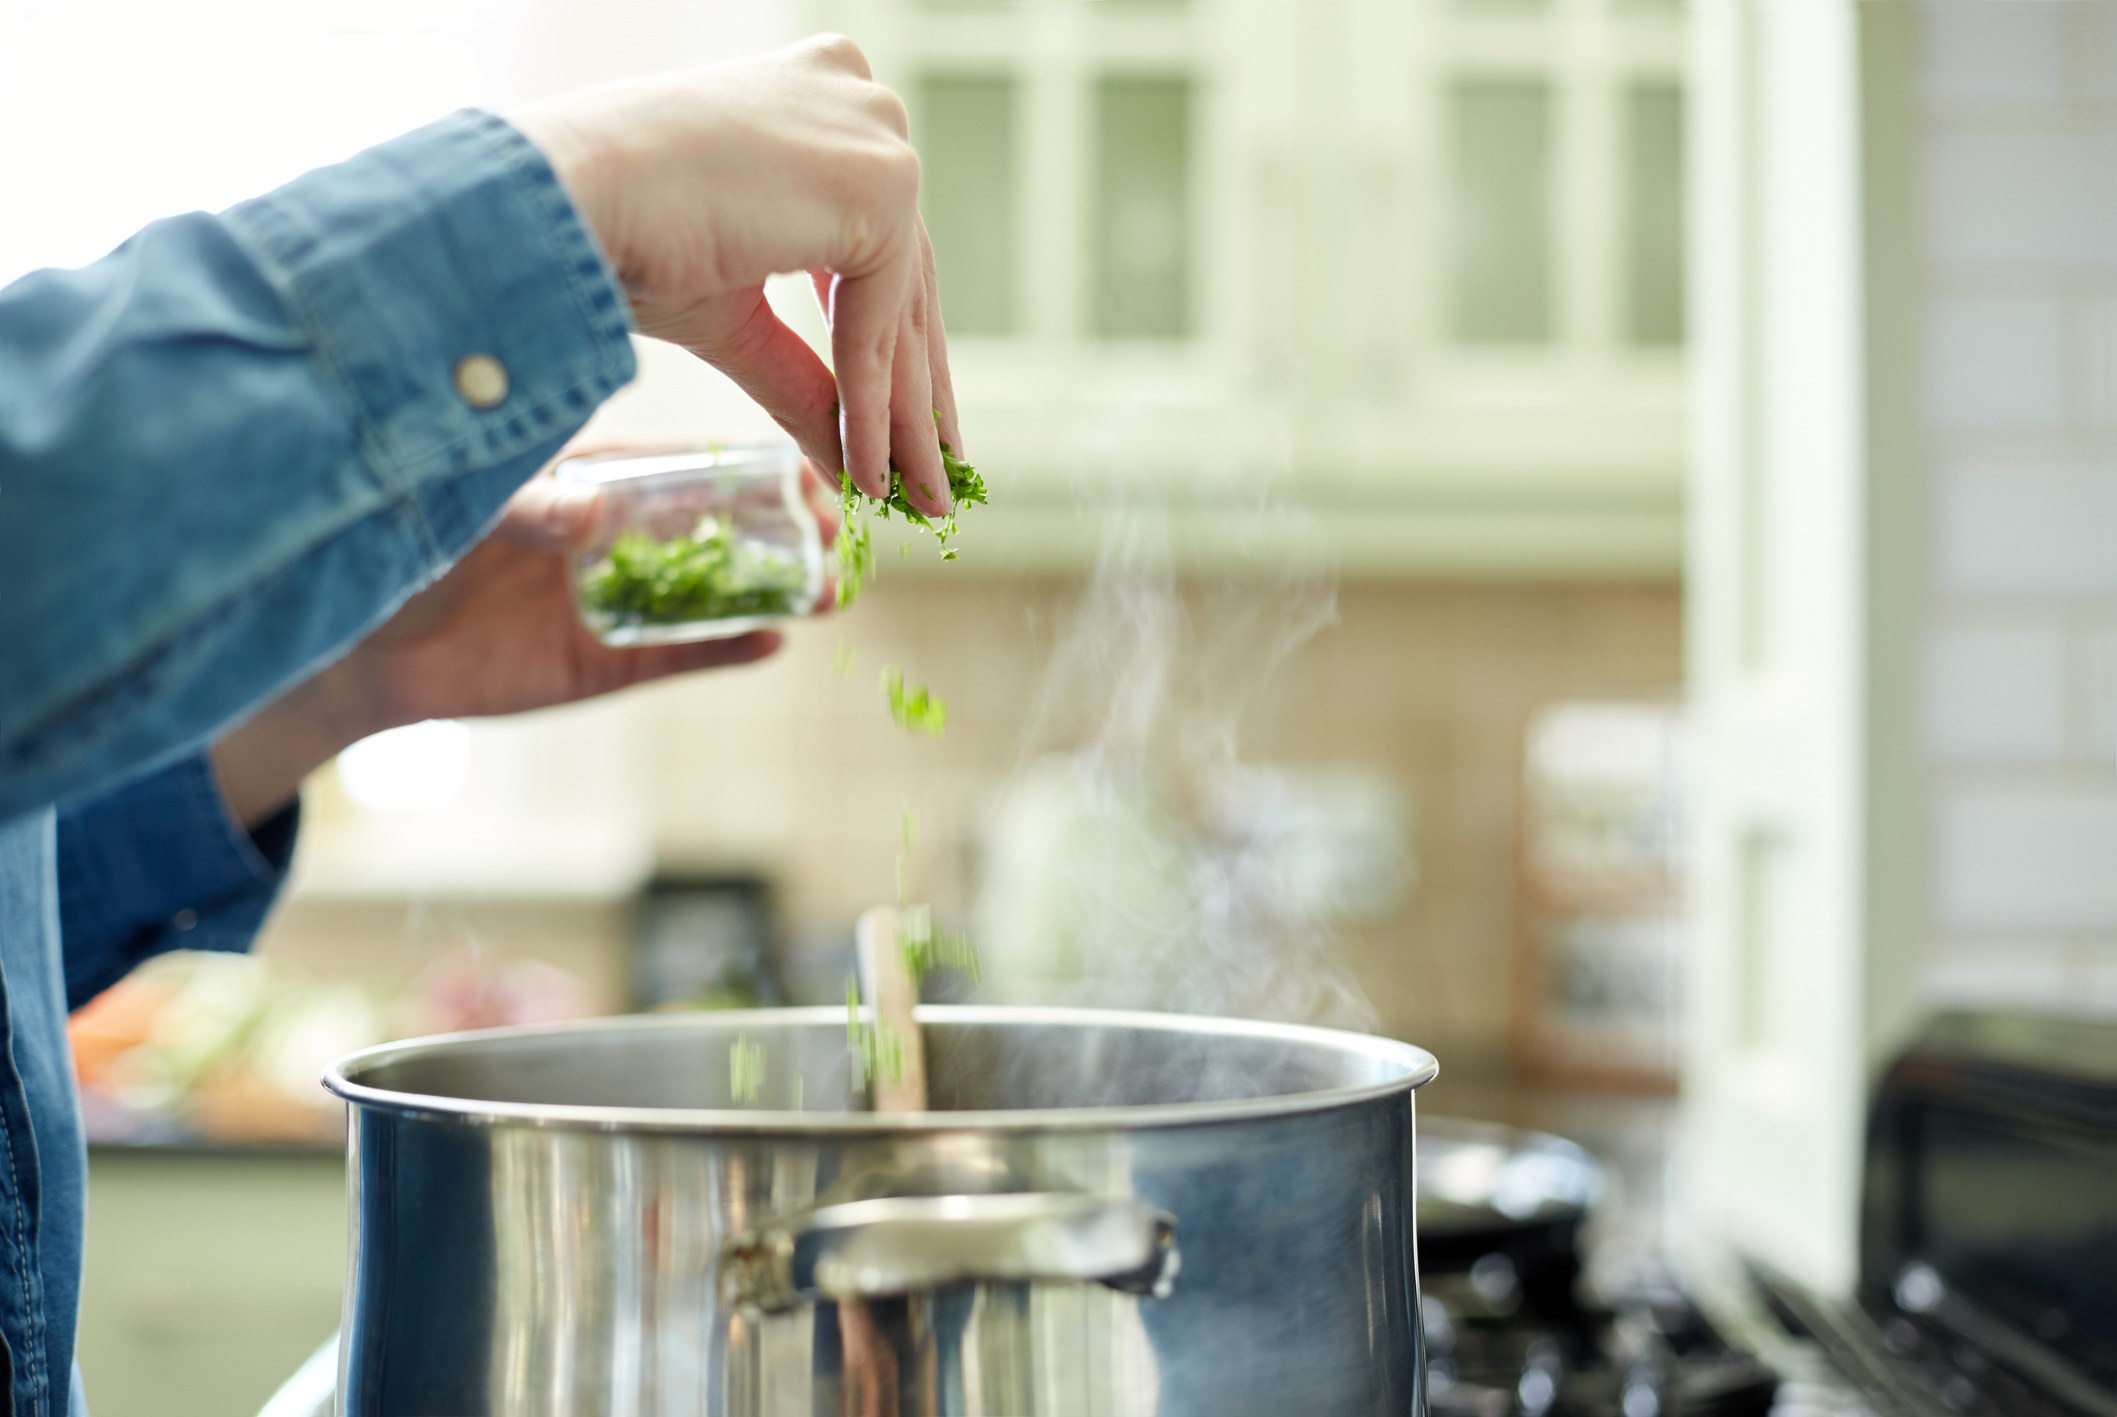 A woman sprinkling cilantro into a pot.